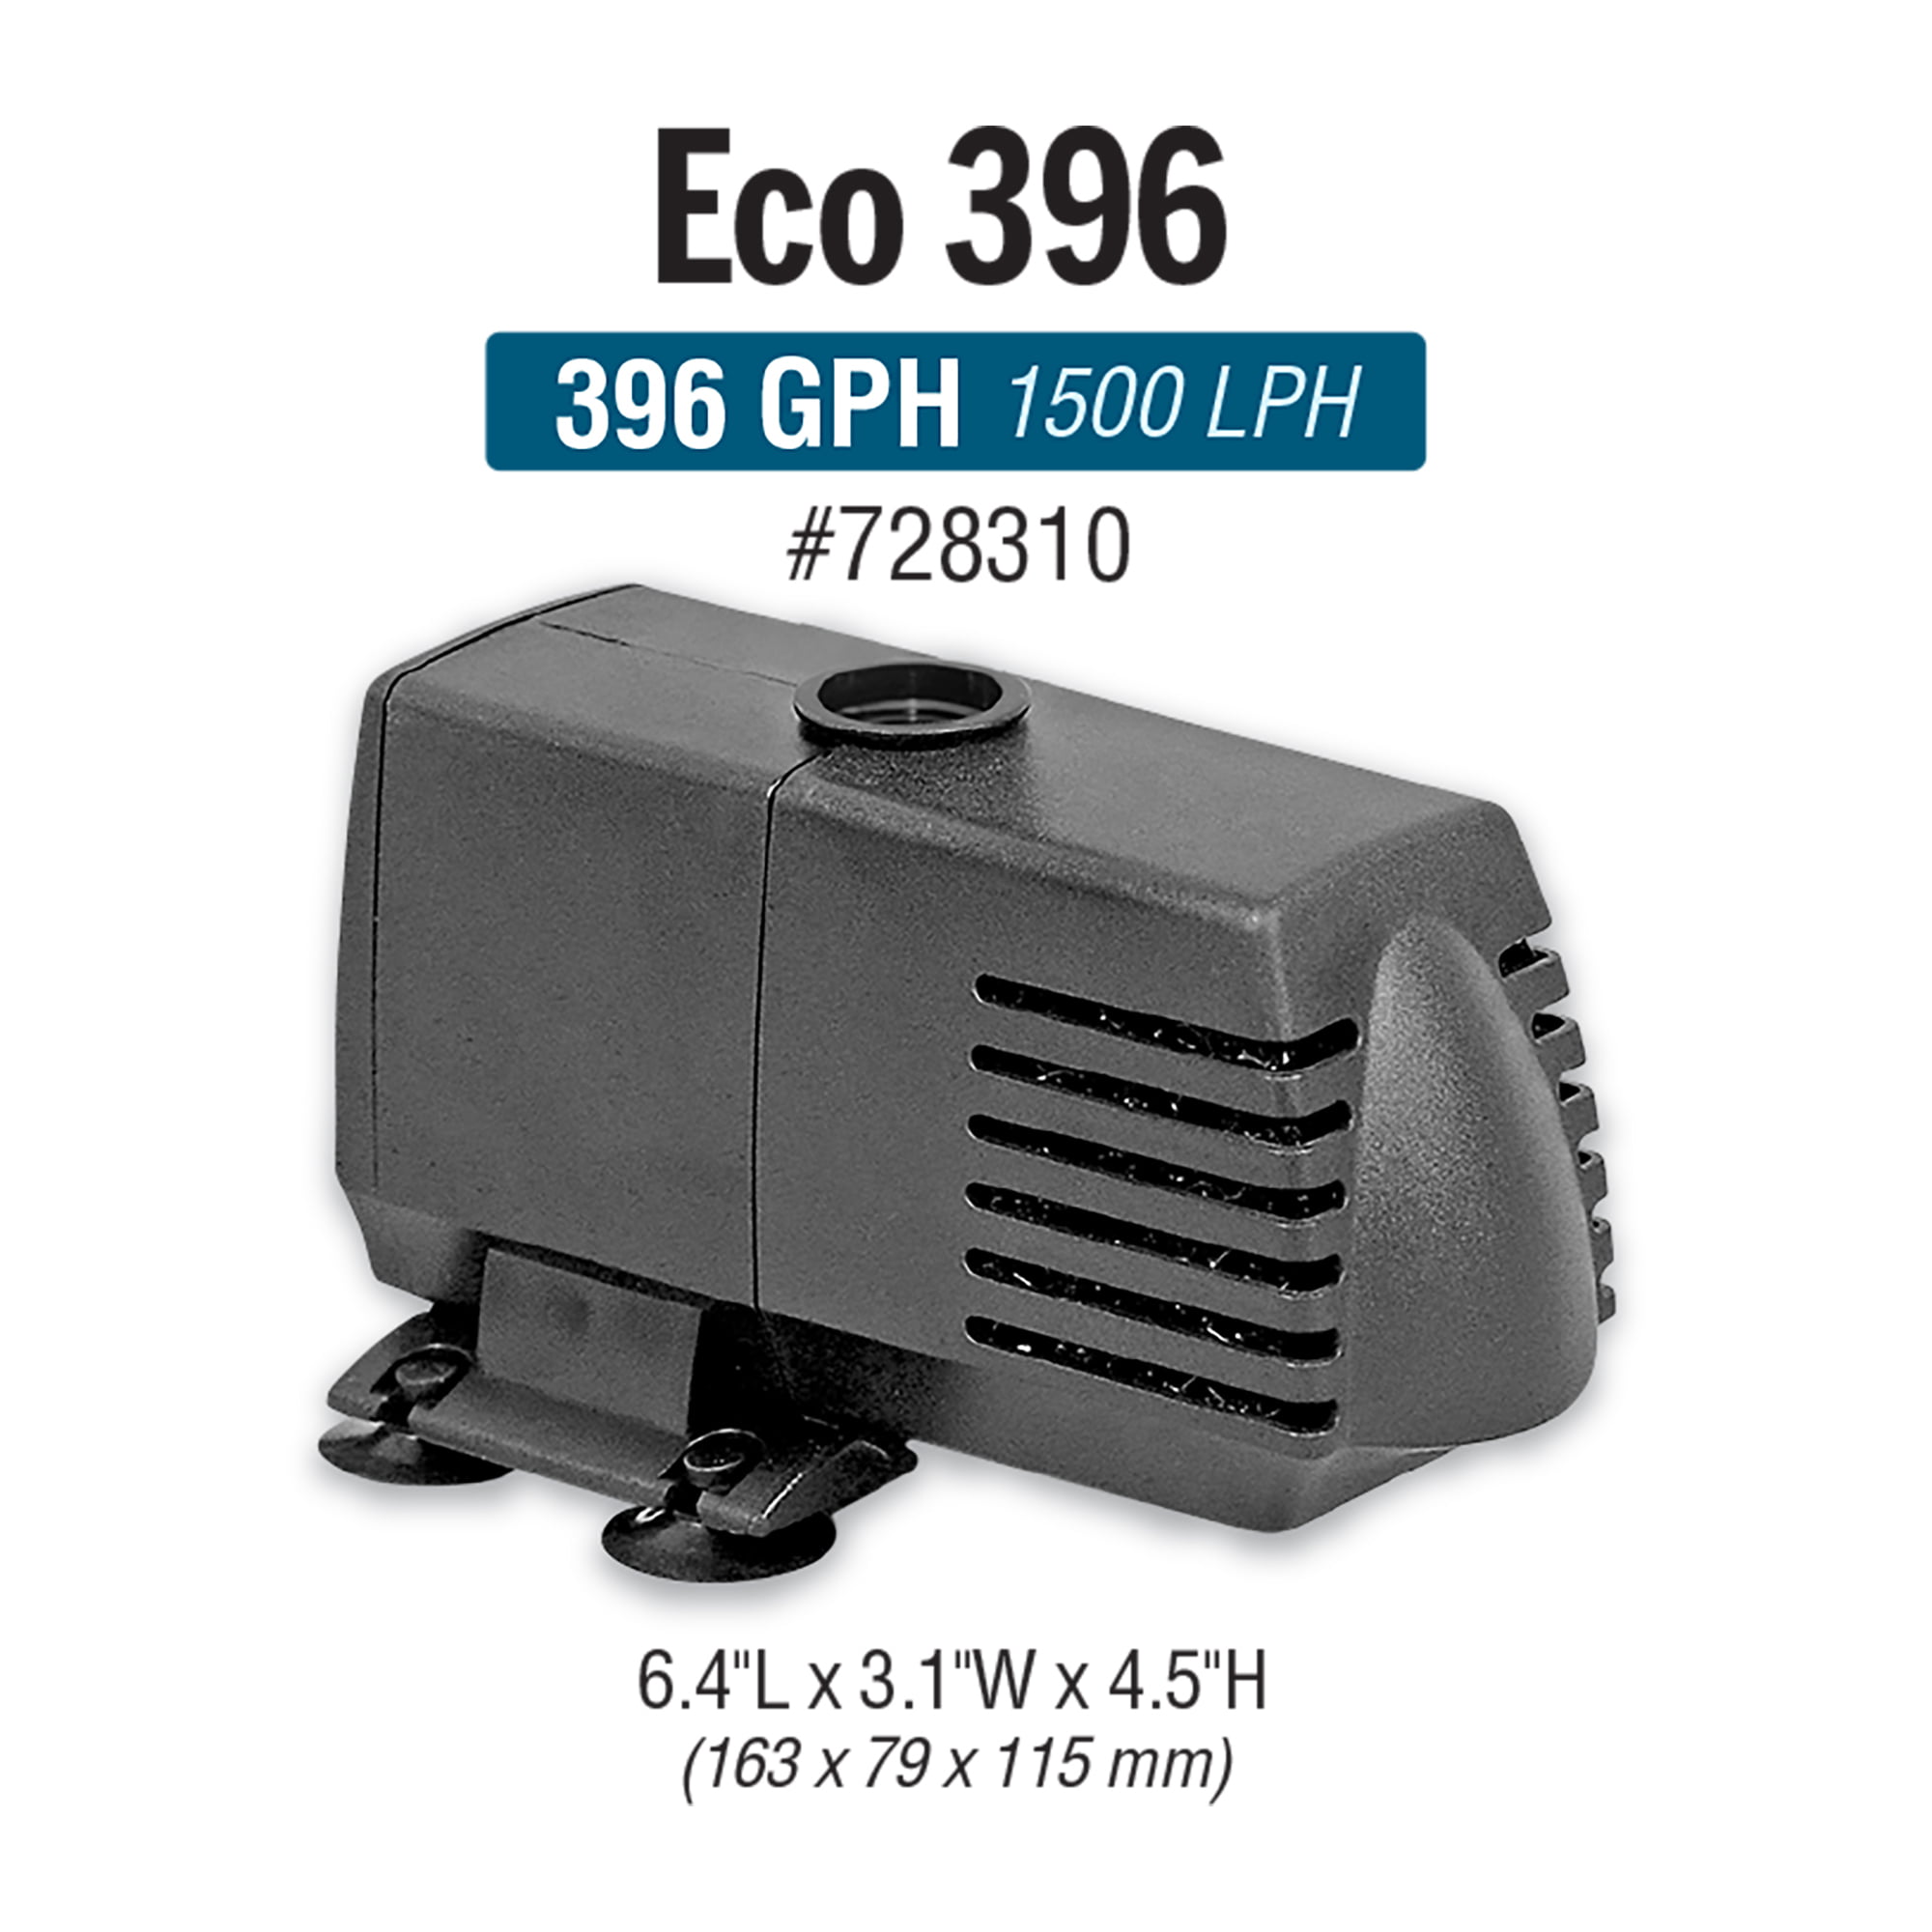 EcoPlus Eco 396 Submersible Pump 396 GPH SAVE $$ W/ BAY HYDRO $$ 